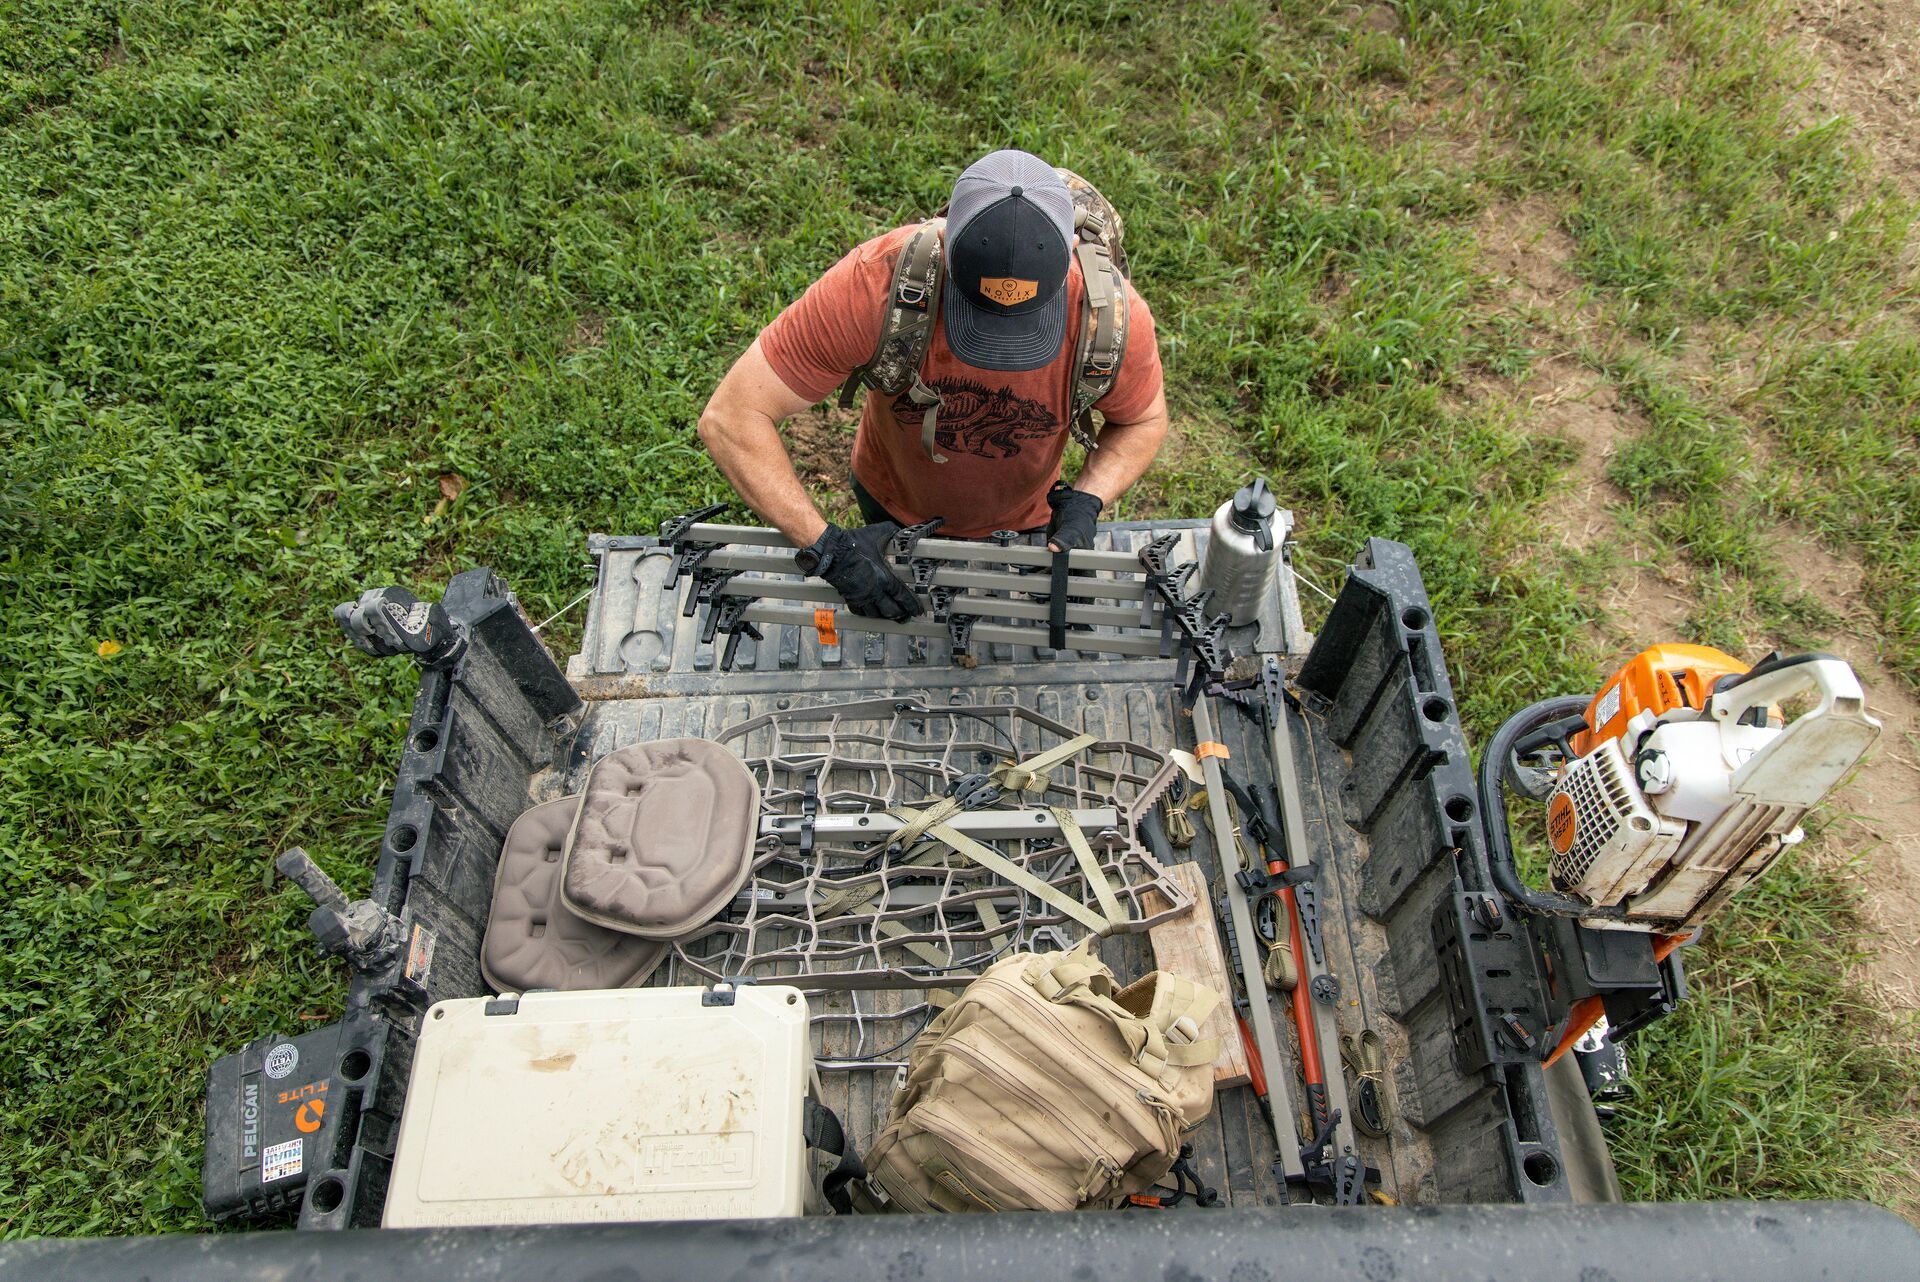 A hunter gathering treestand equipment. 